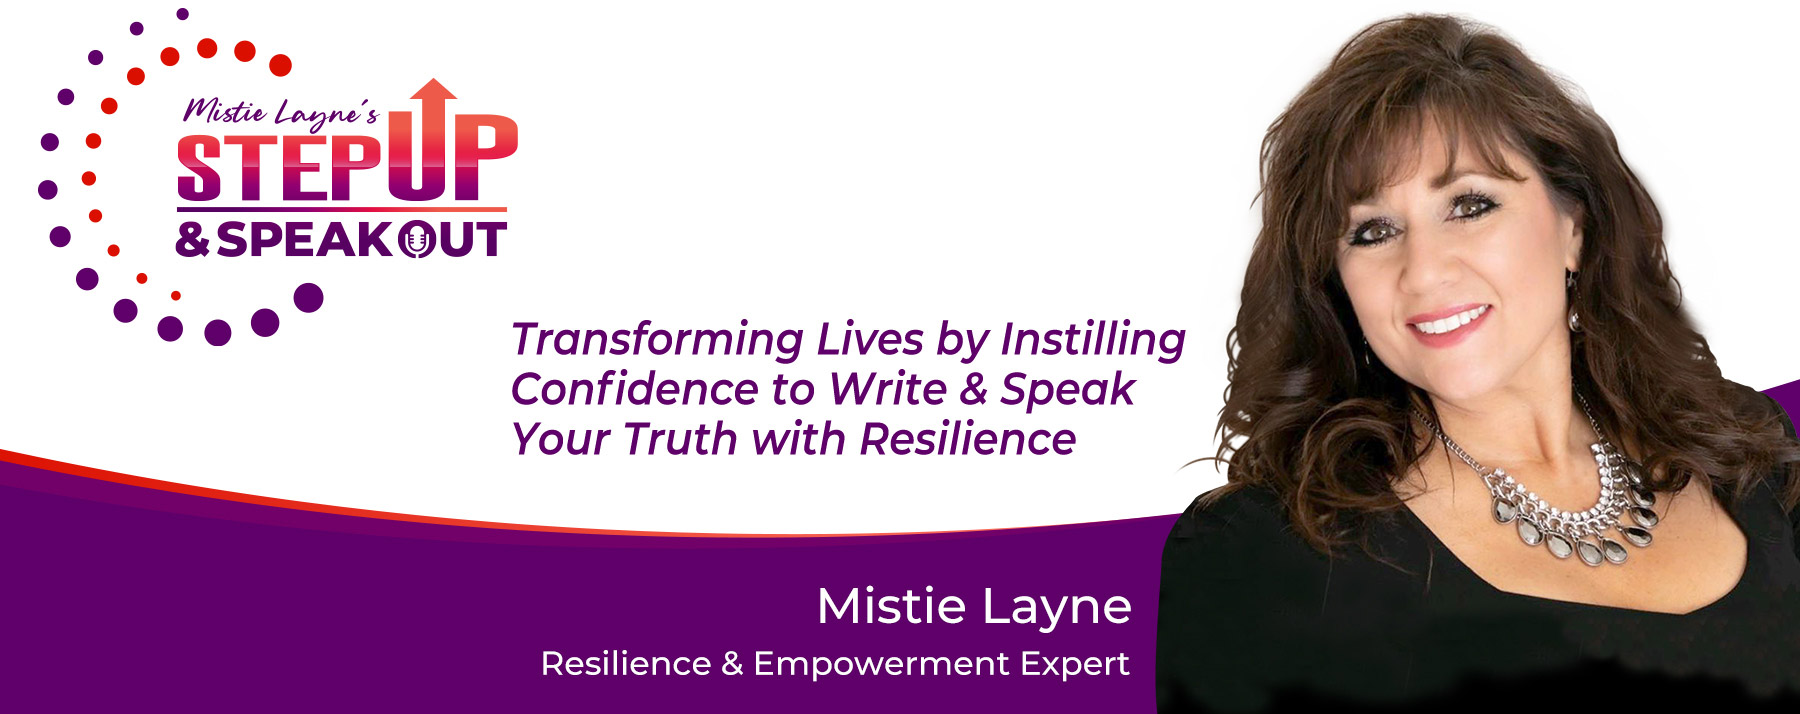 Mistie Layne - Resilience & Empowerment Coach